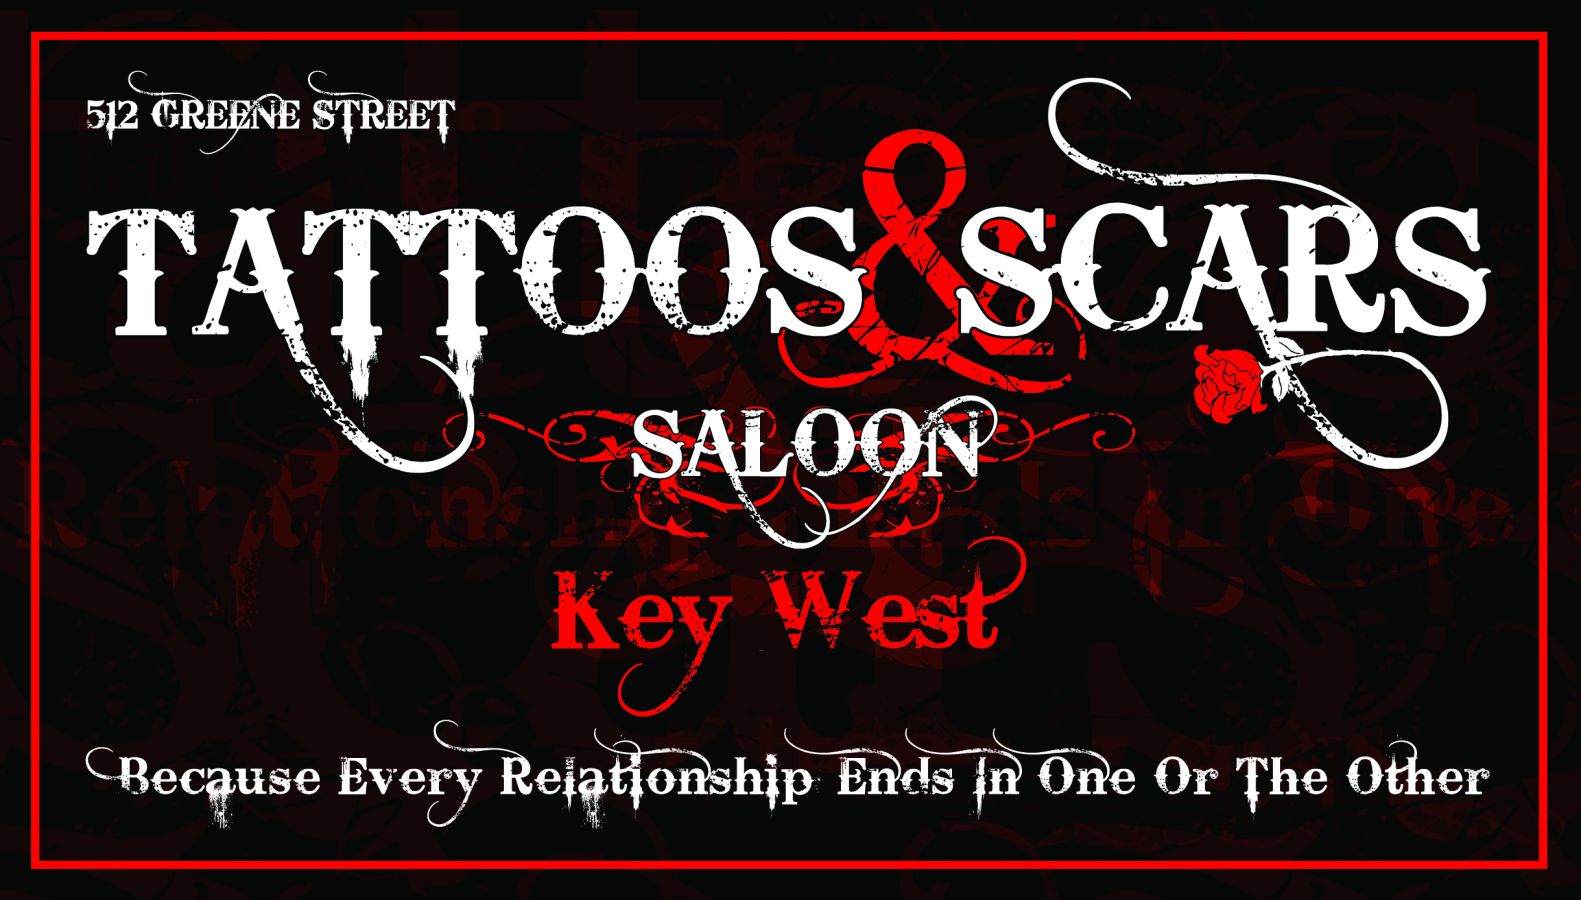 Tattoo's & Scars Saloon